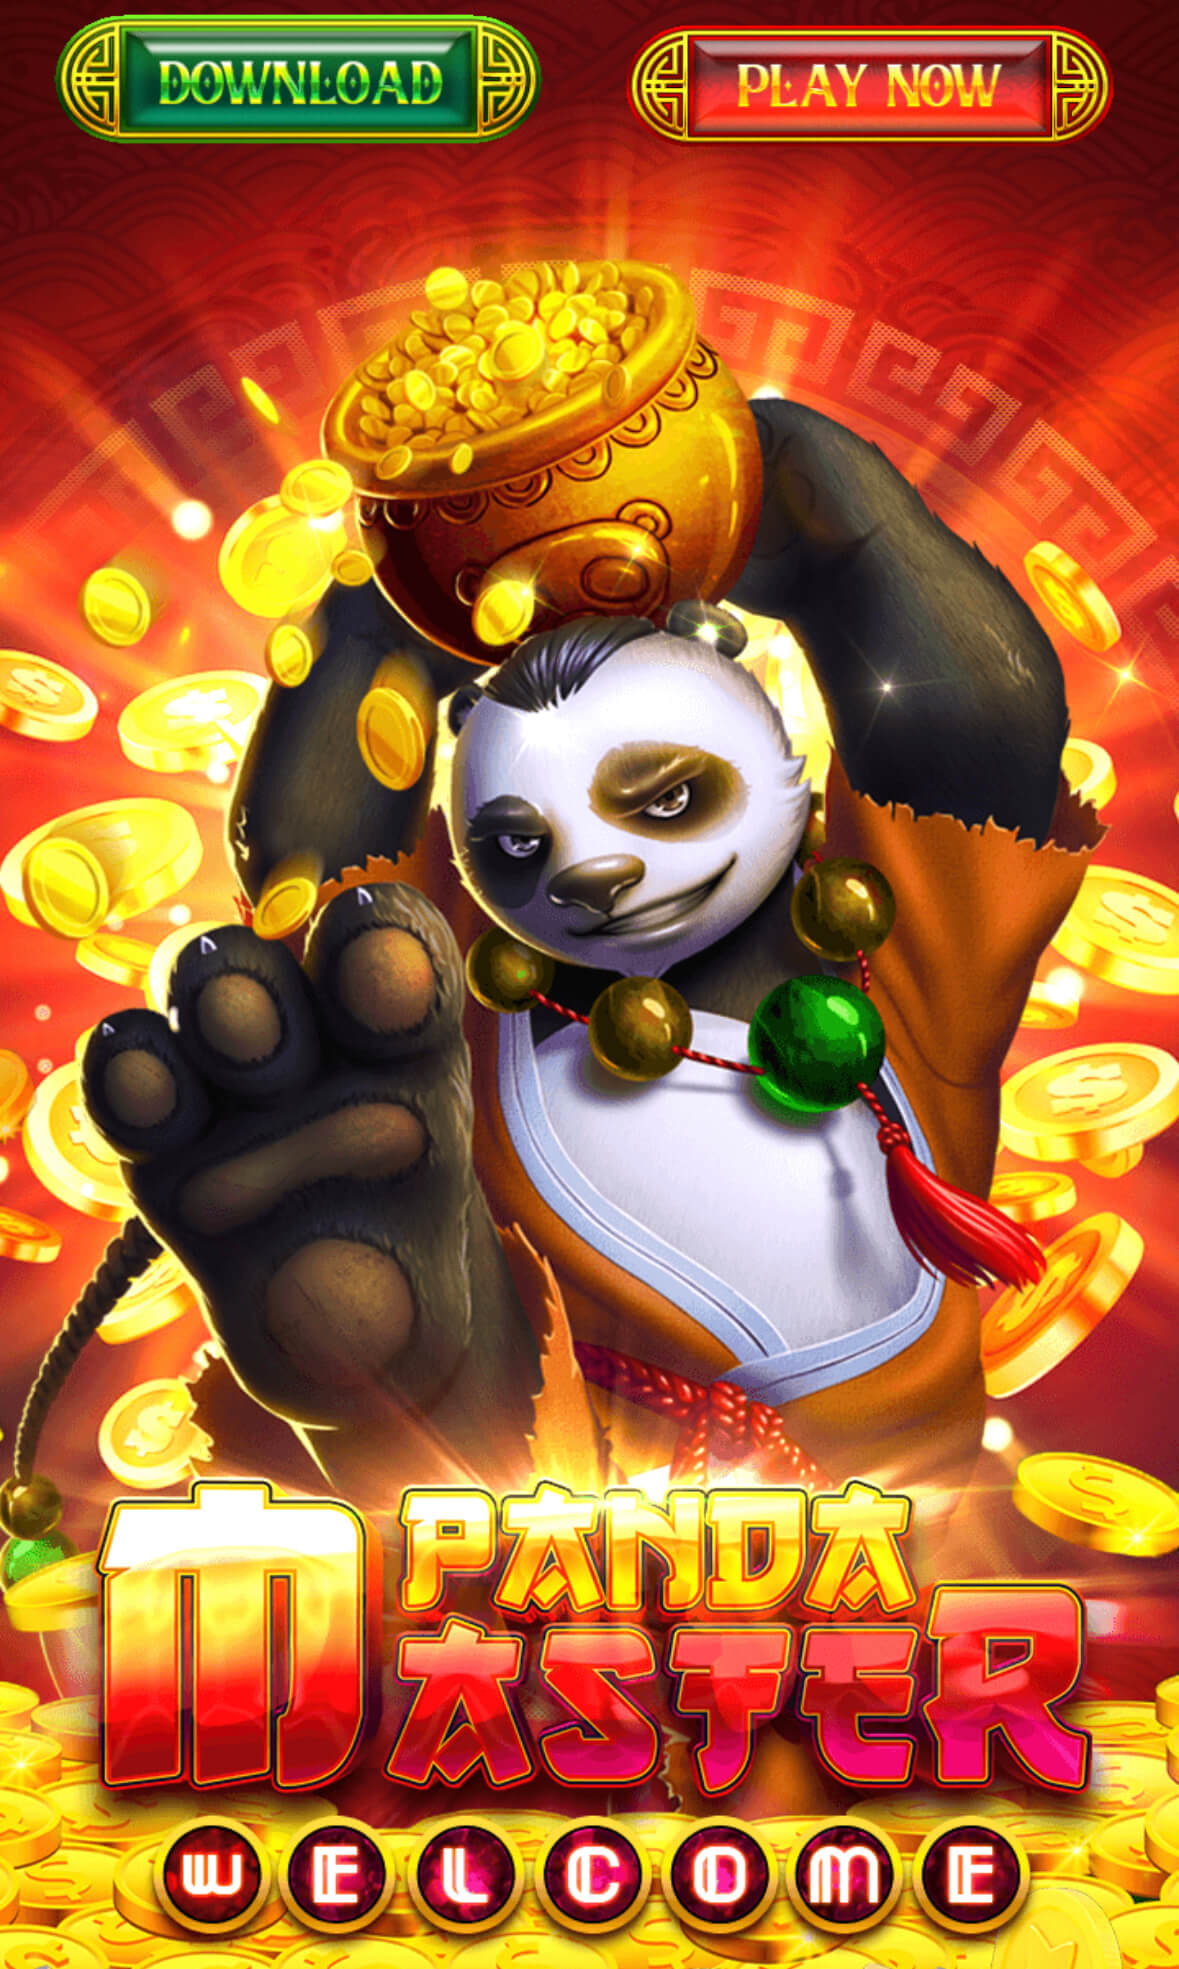 Fire kirin panda master download